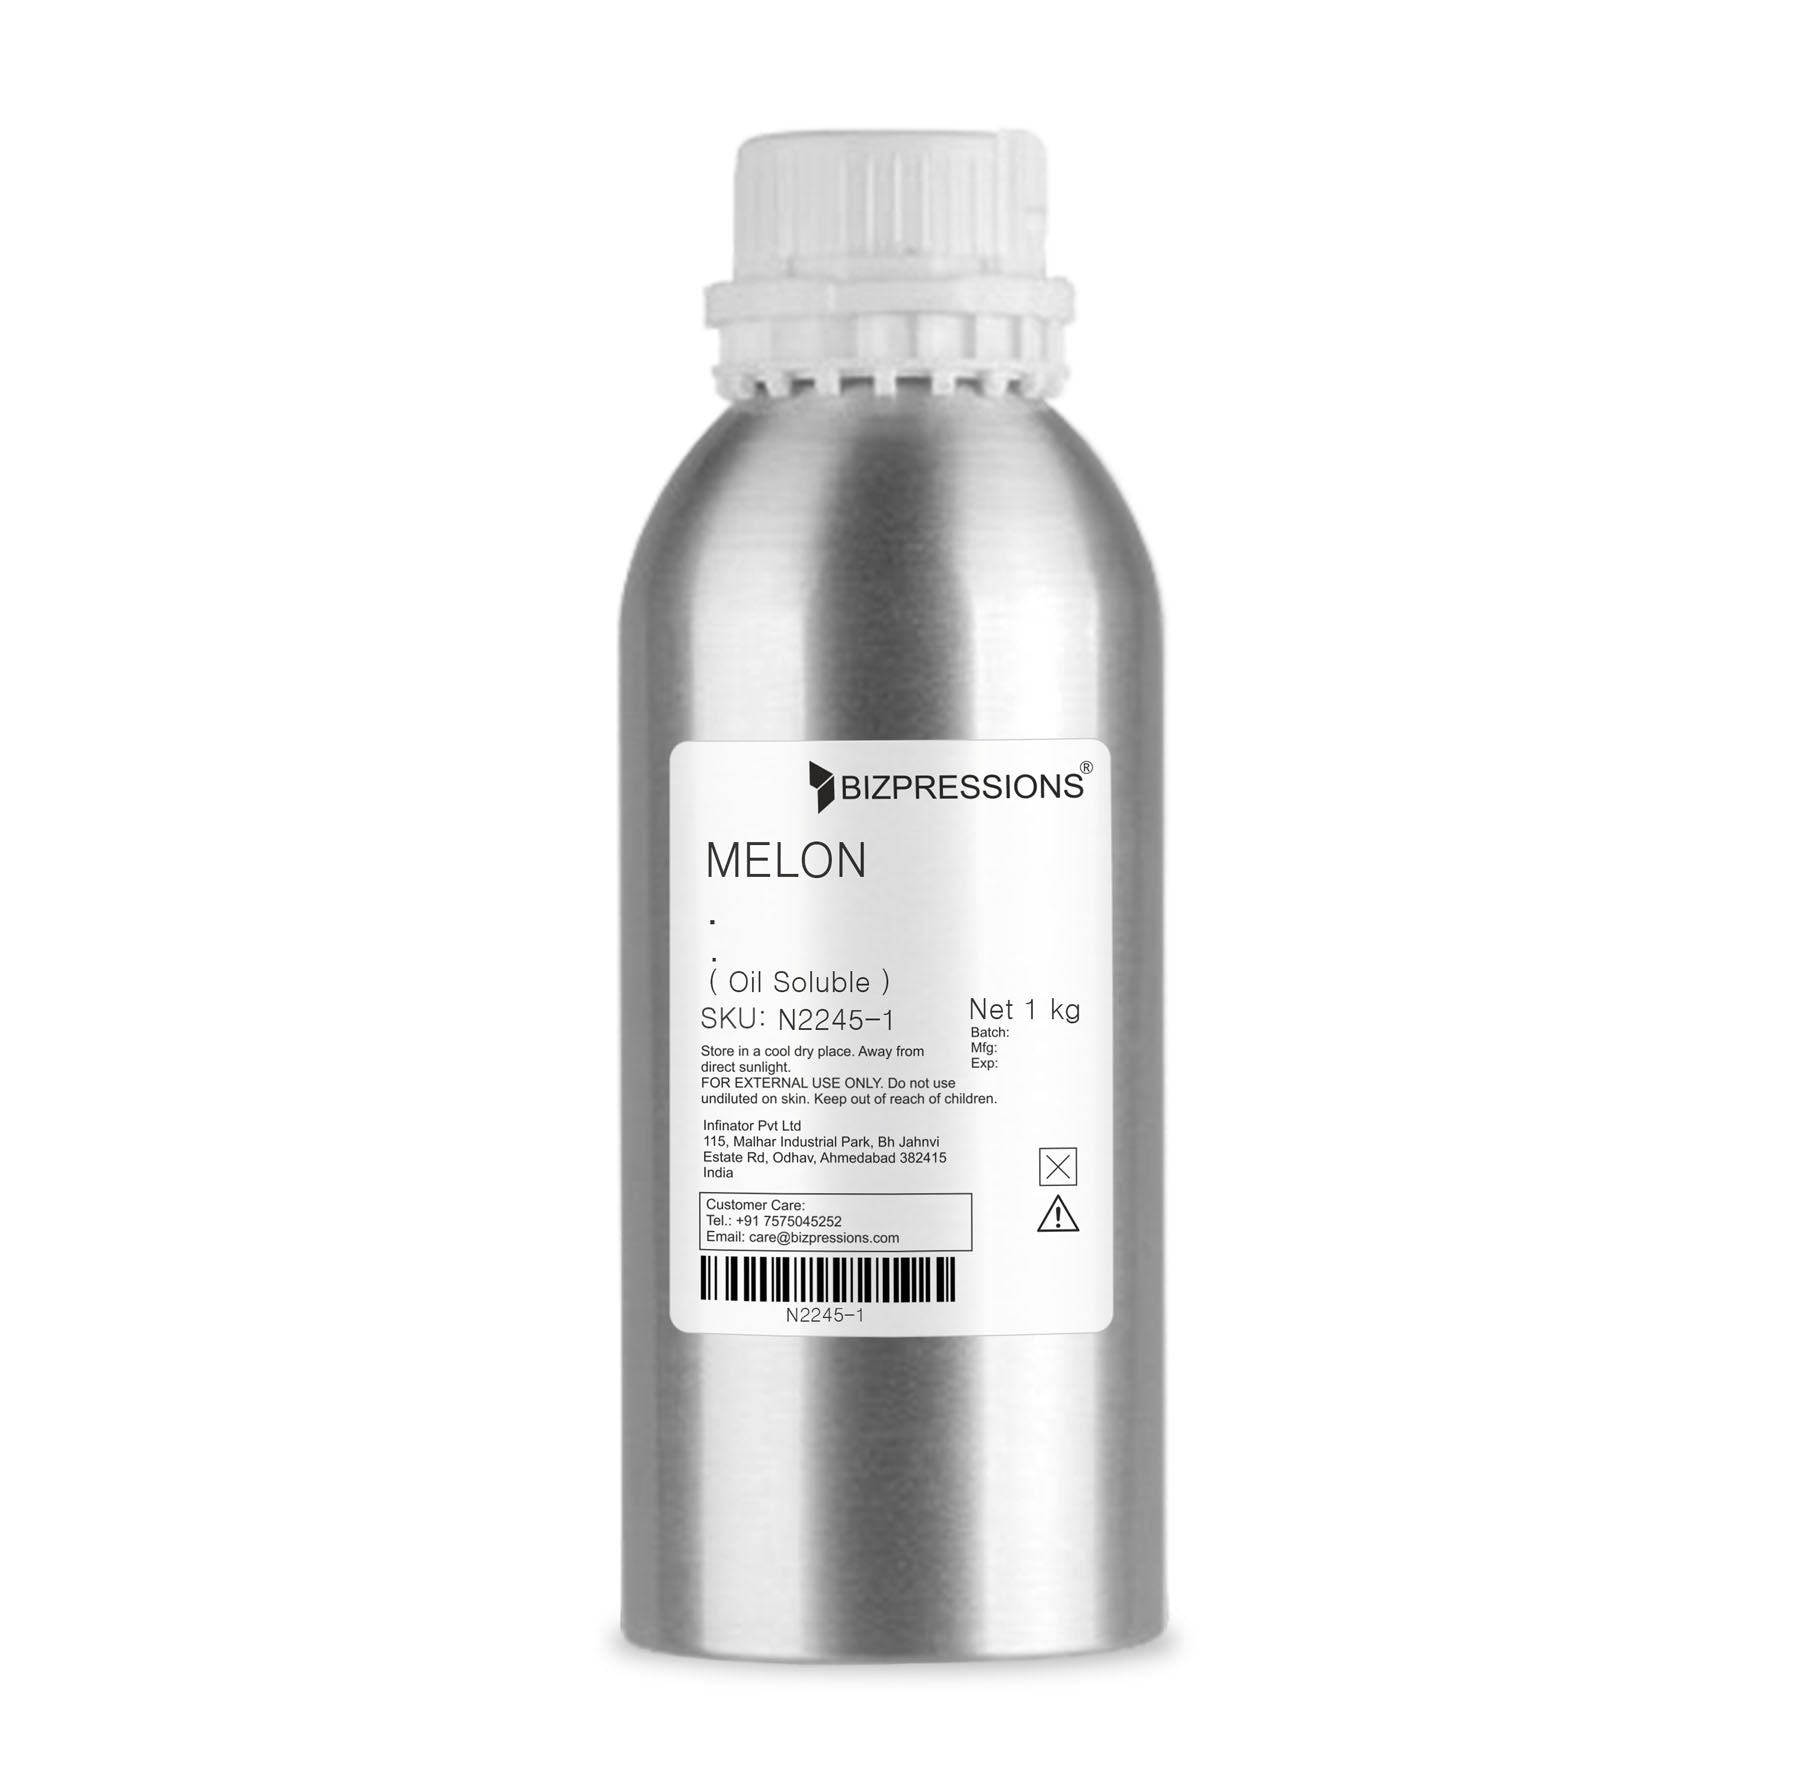 MELON - Fragrance ( Oil Soluble ) - 1 kg